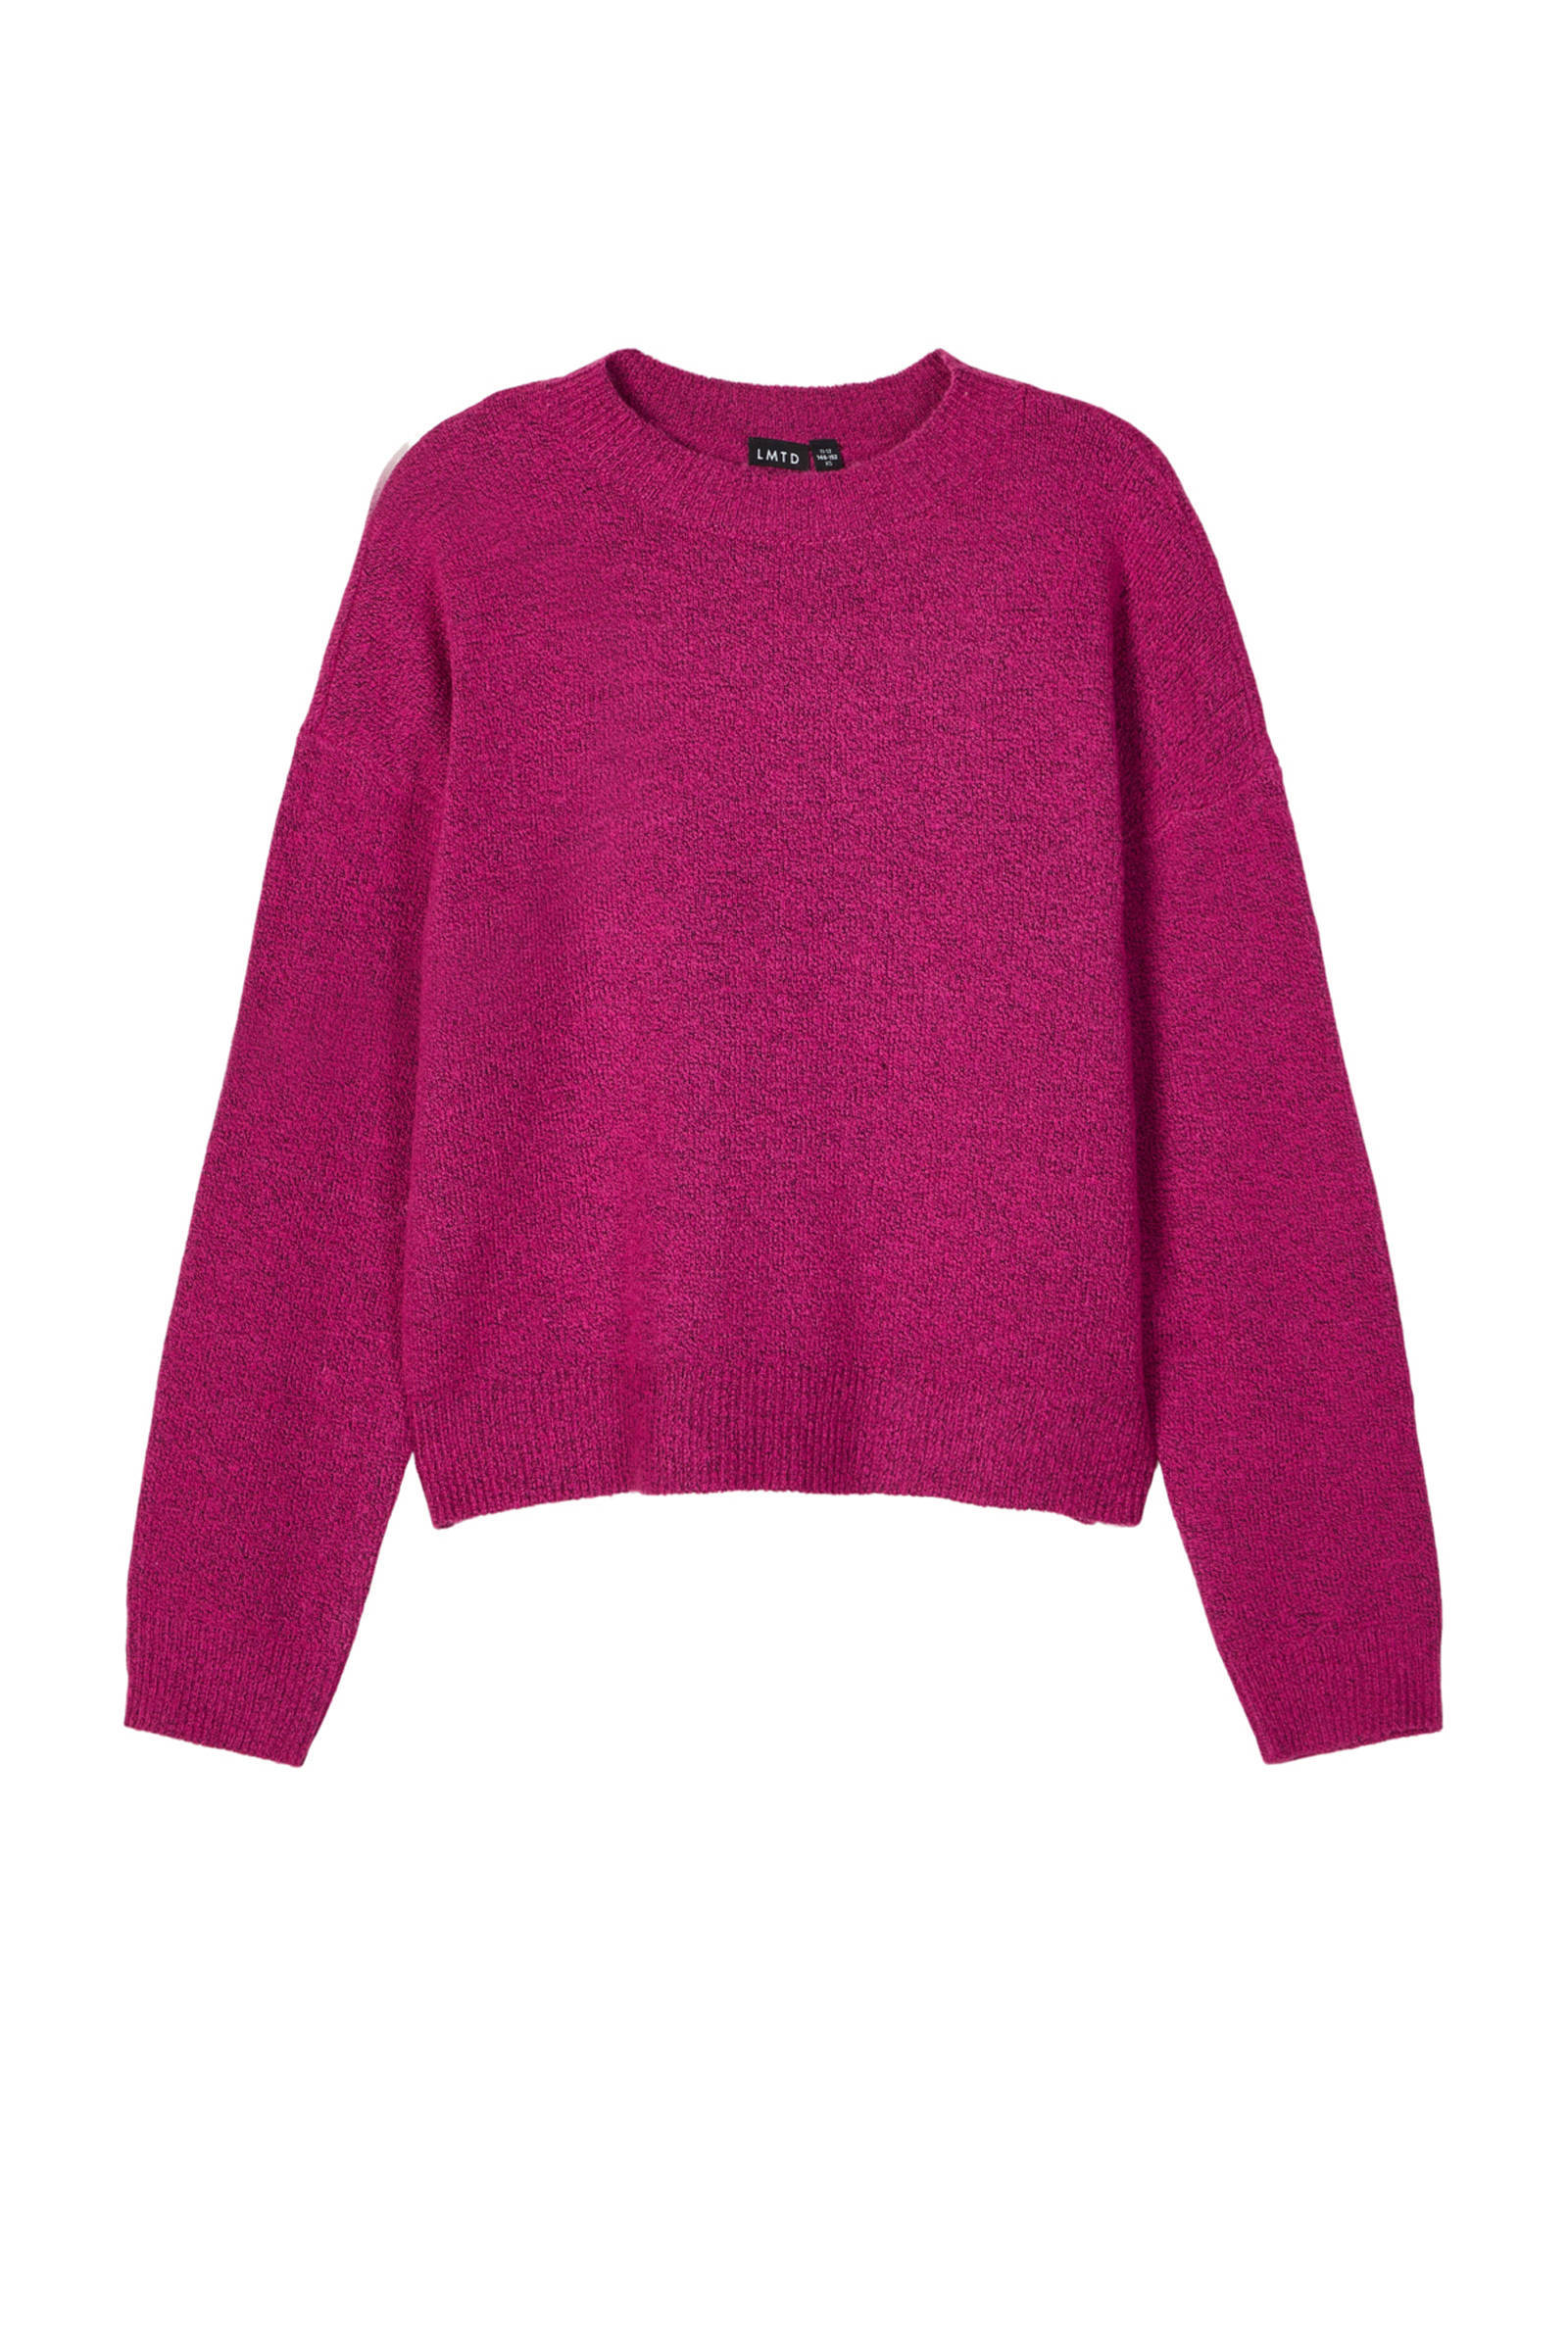 LMTD trui Nonette van gerecycled polyester roze online kopen